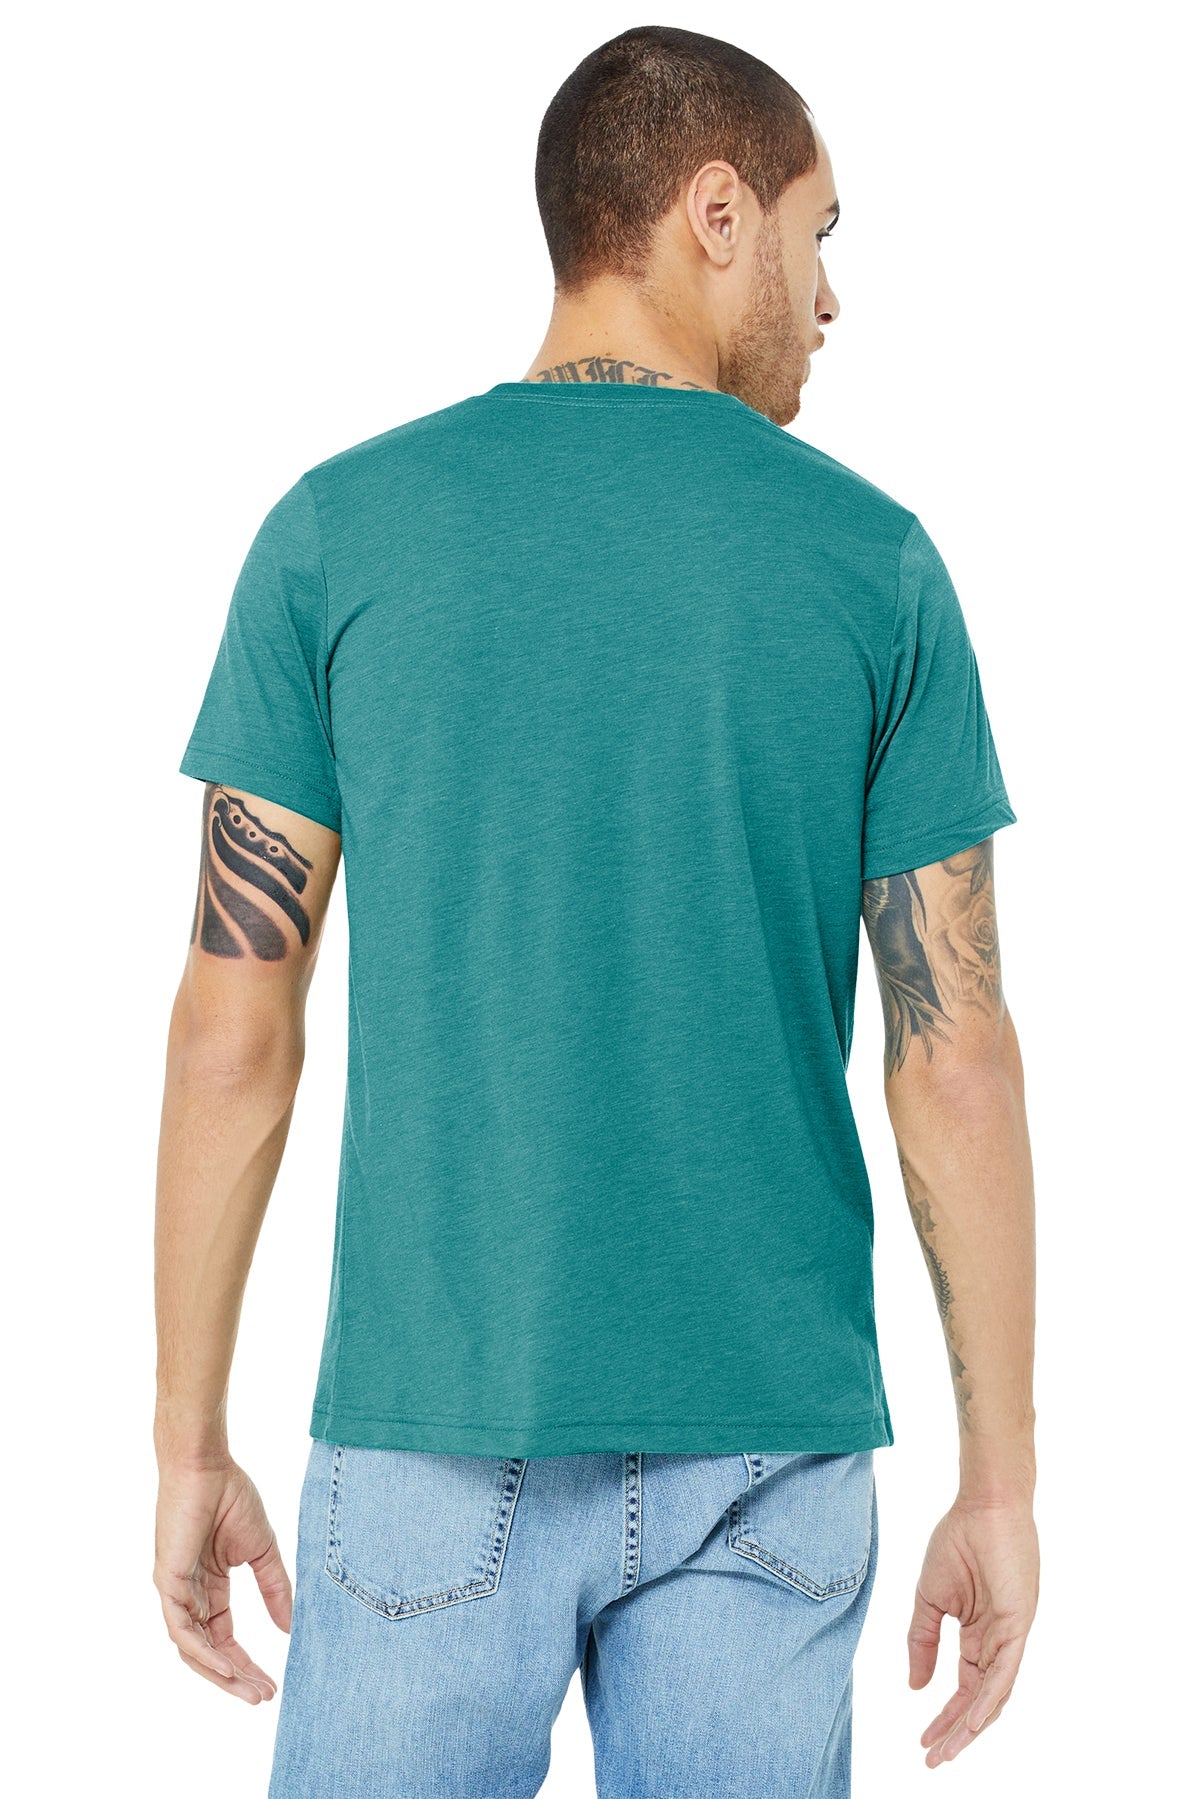 bella + canvas unisex triblend short sleeve t-shirt 3413c teal triblend